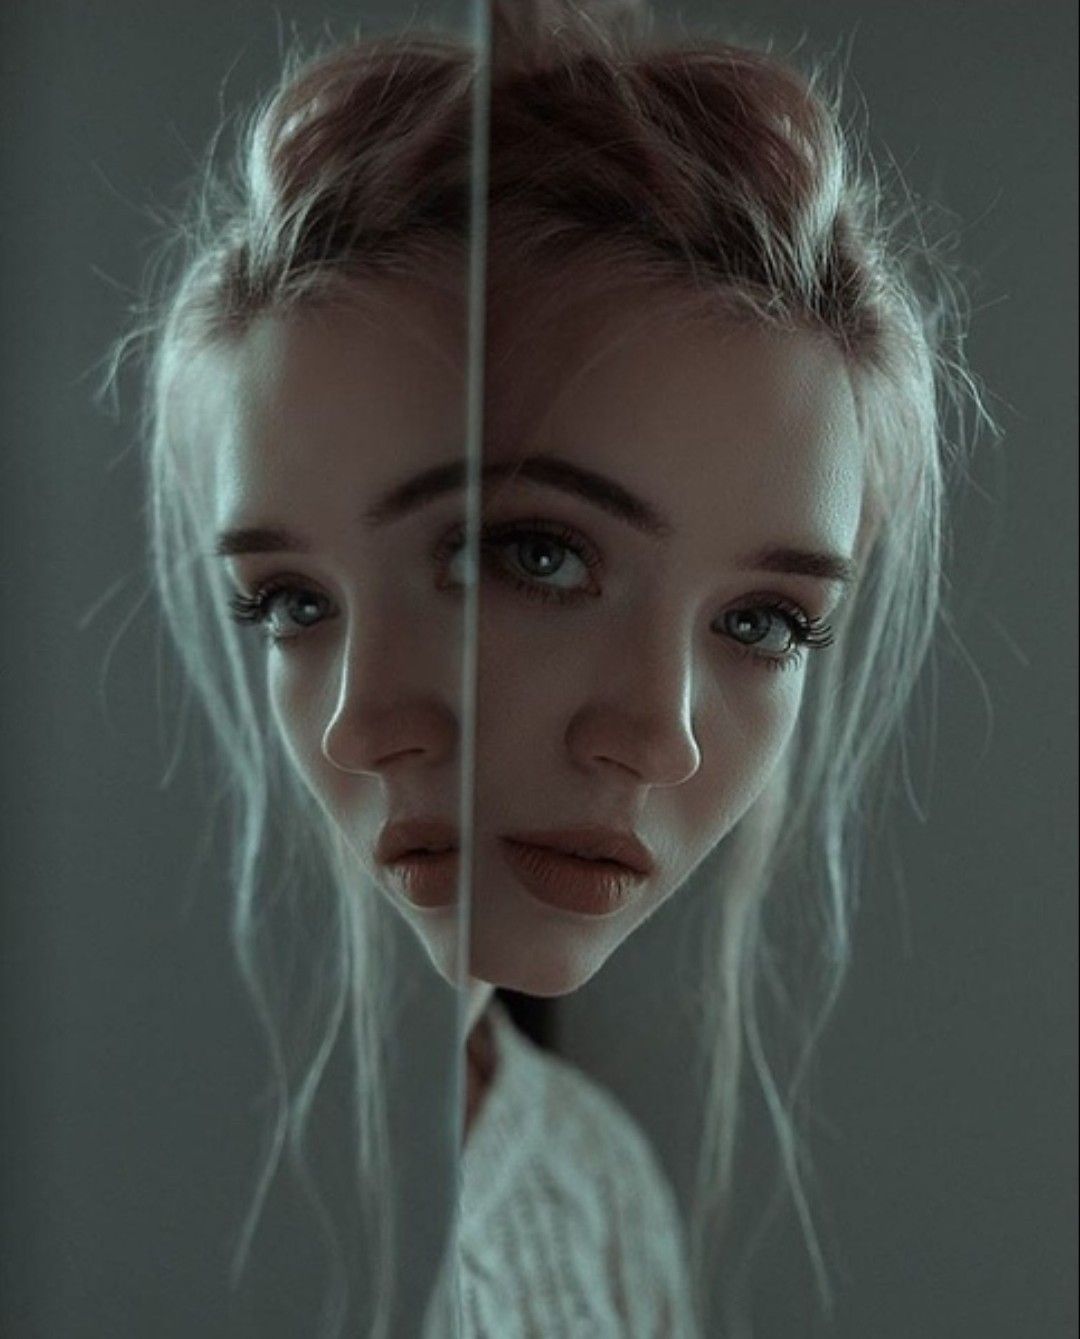 girl's reflection - girl's reflection -   13 beauty Photoshoot mirror ideas